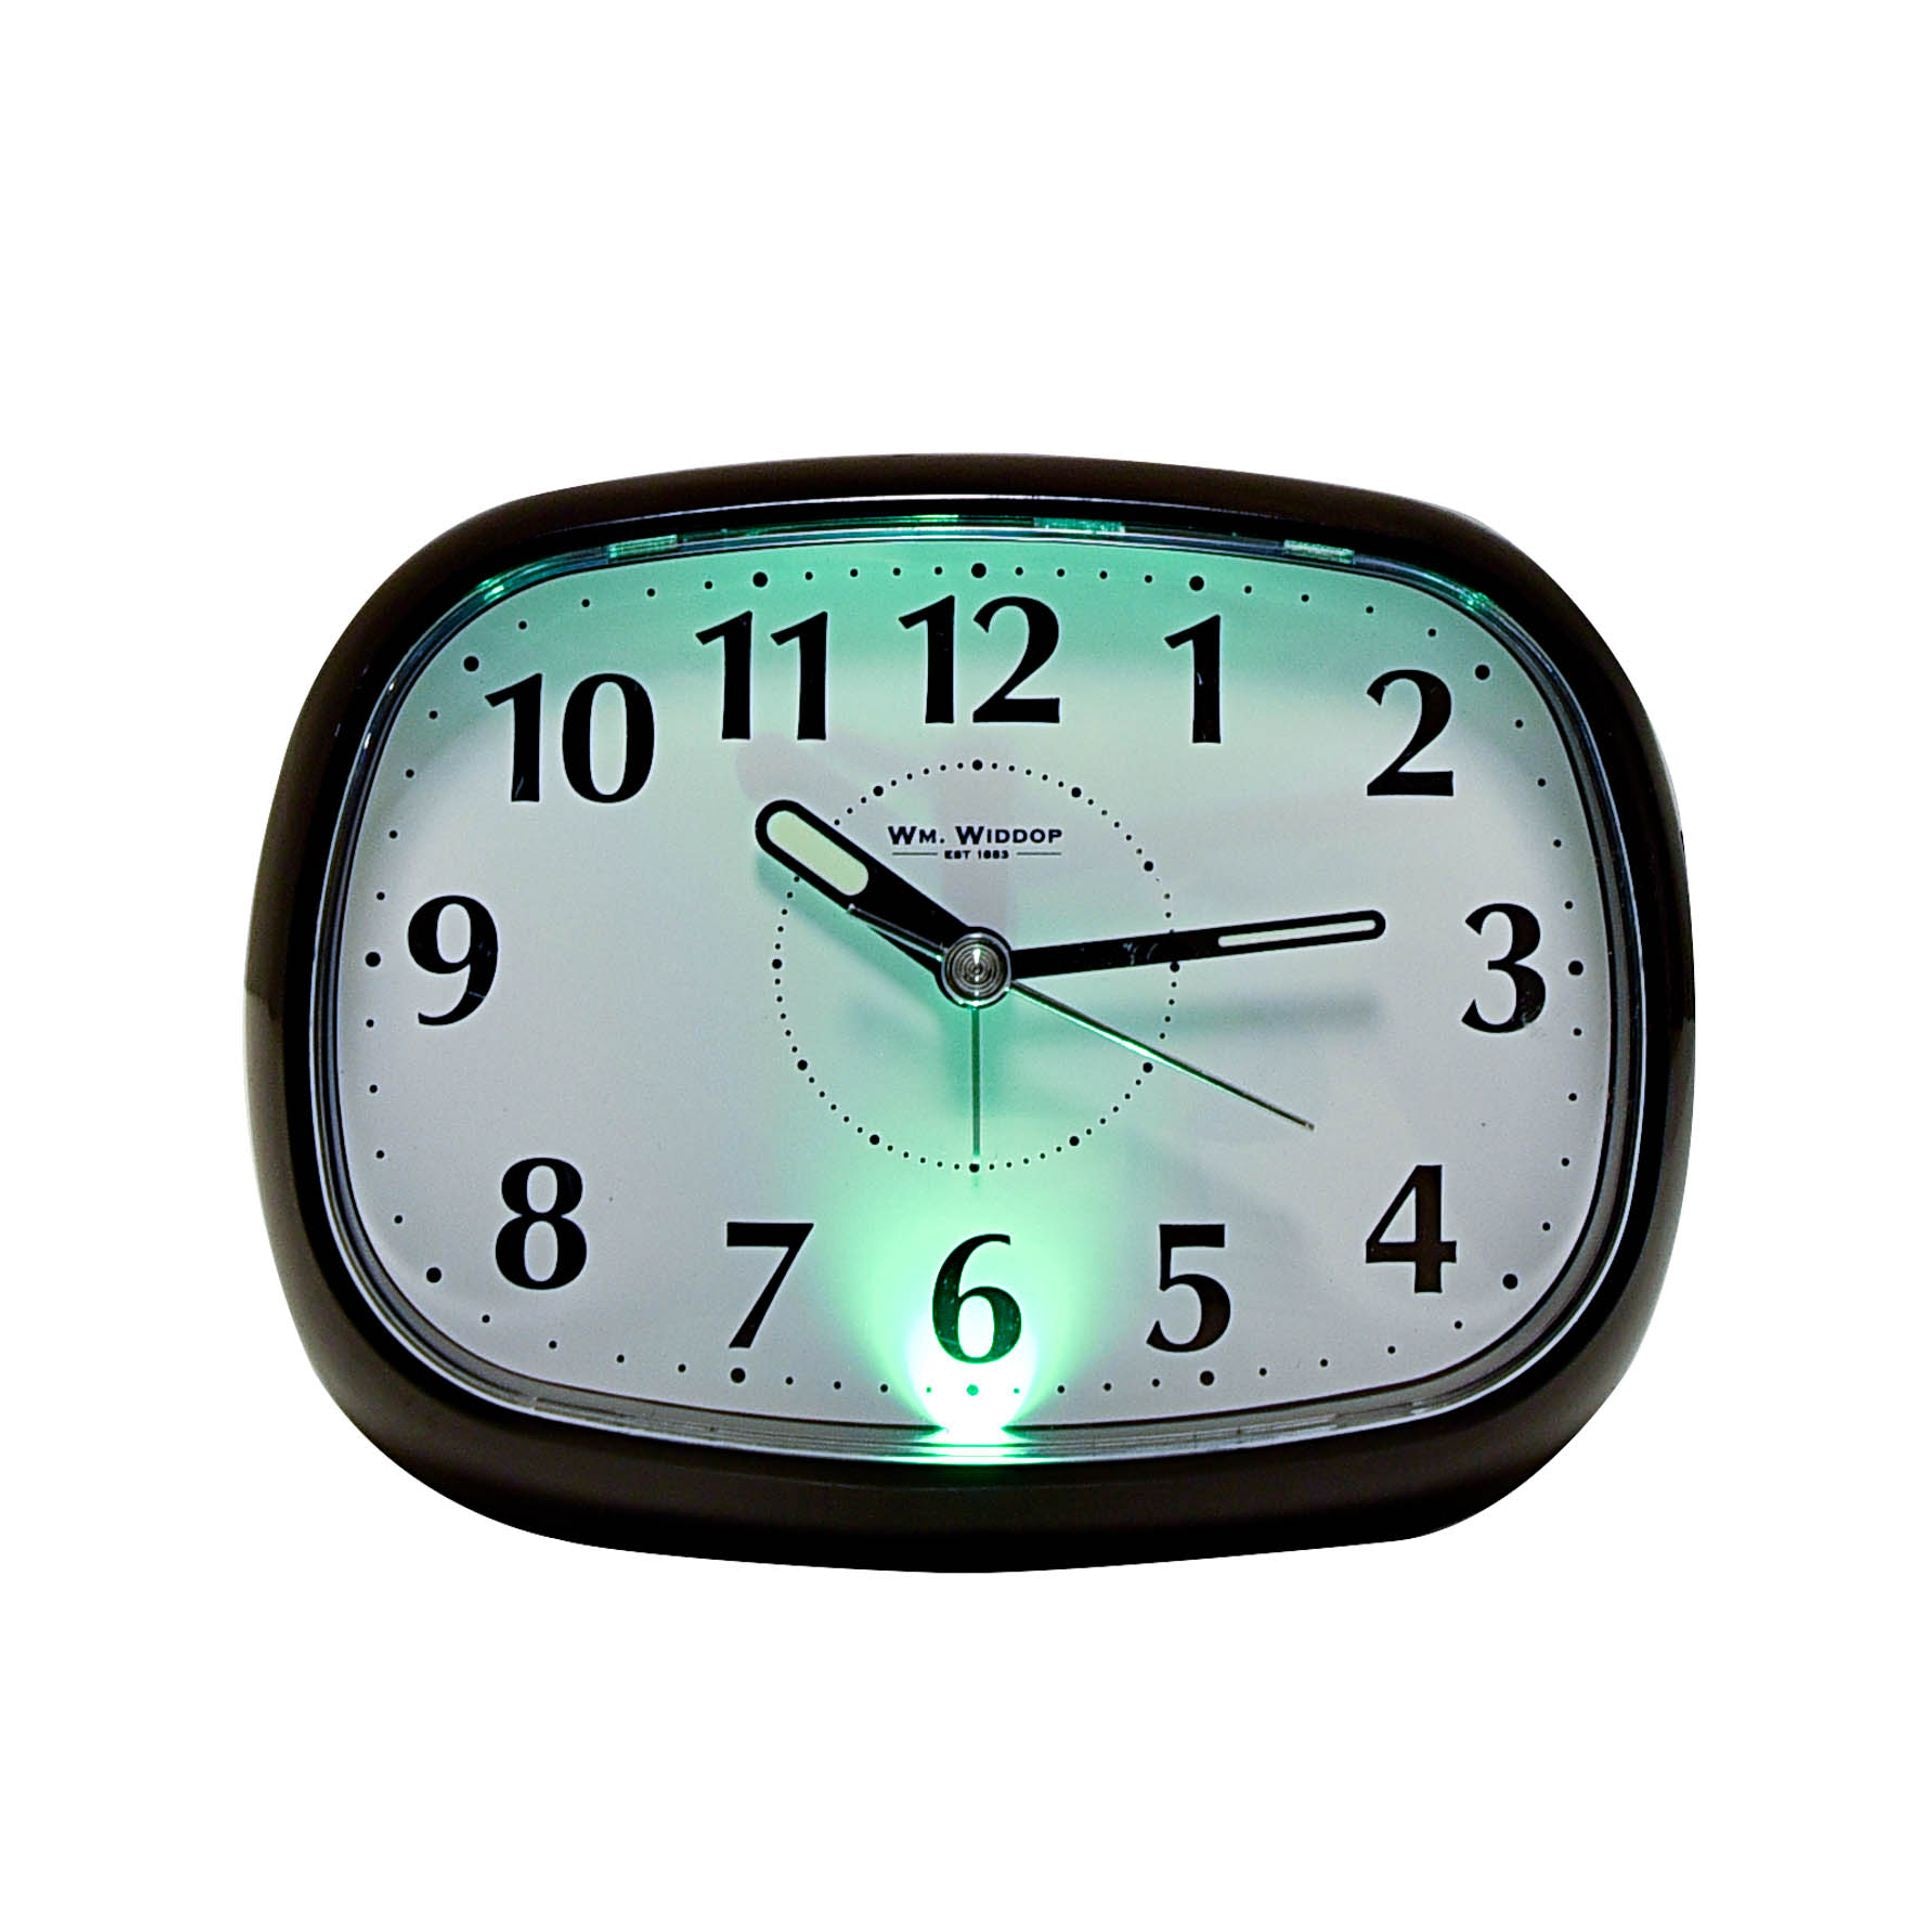 Oval Alarm Clock with Light - Black